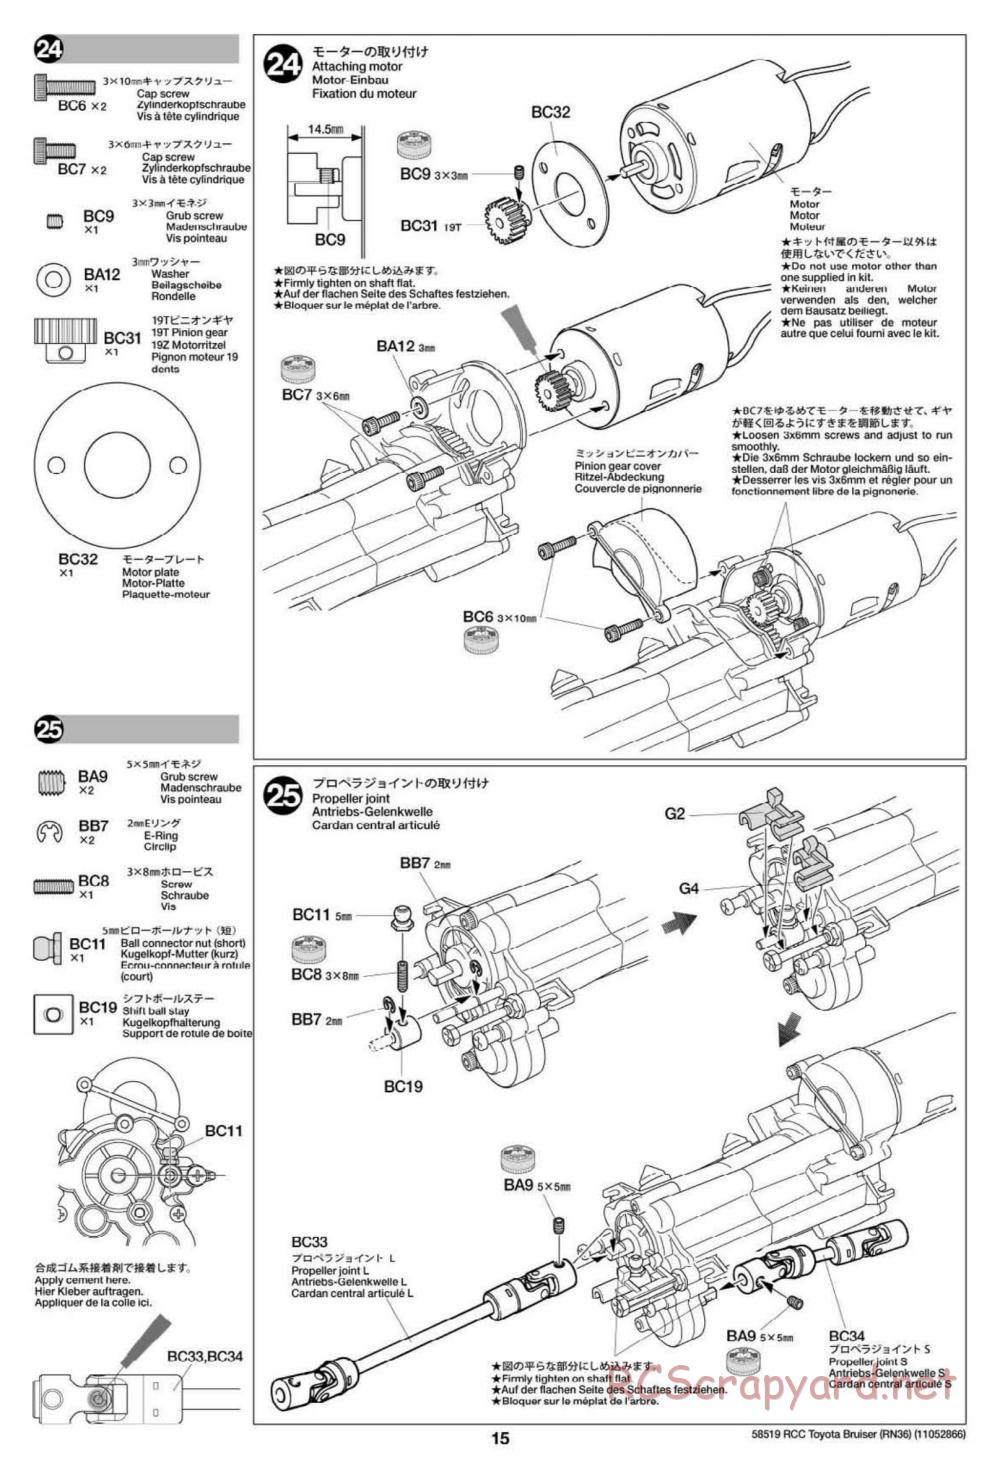 Tamiya - Toyota 4x4 Pick Up Bruiser Chassis - Manual - Page 15